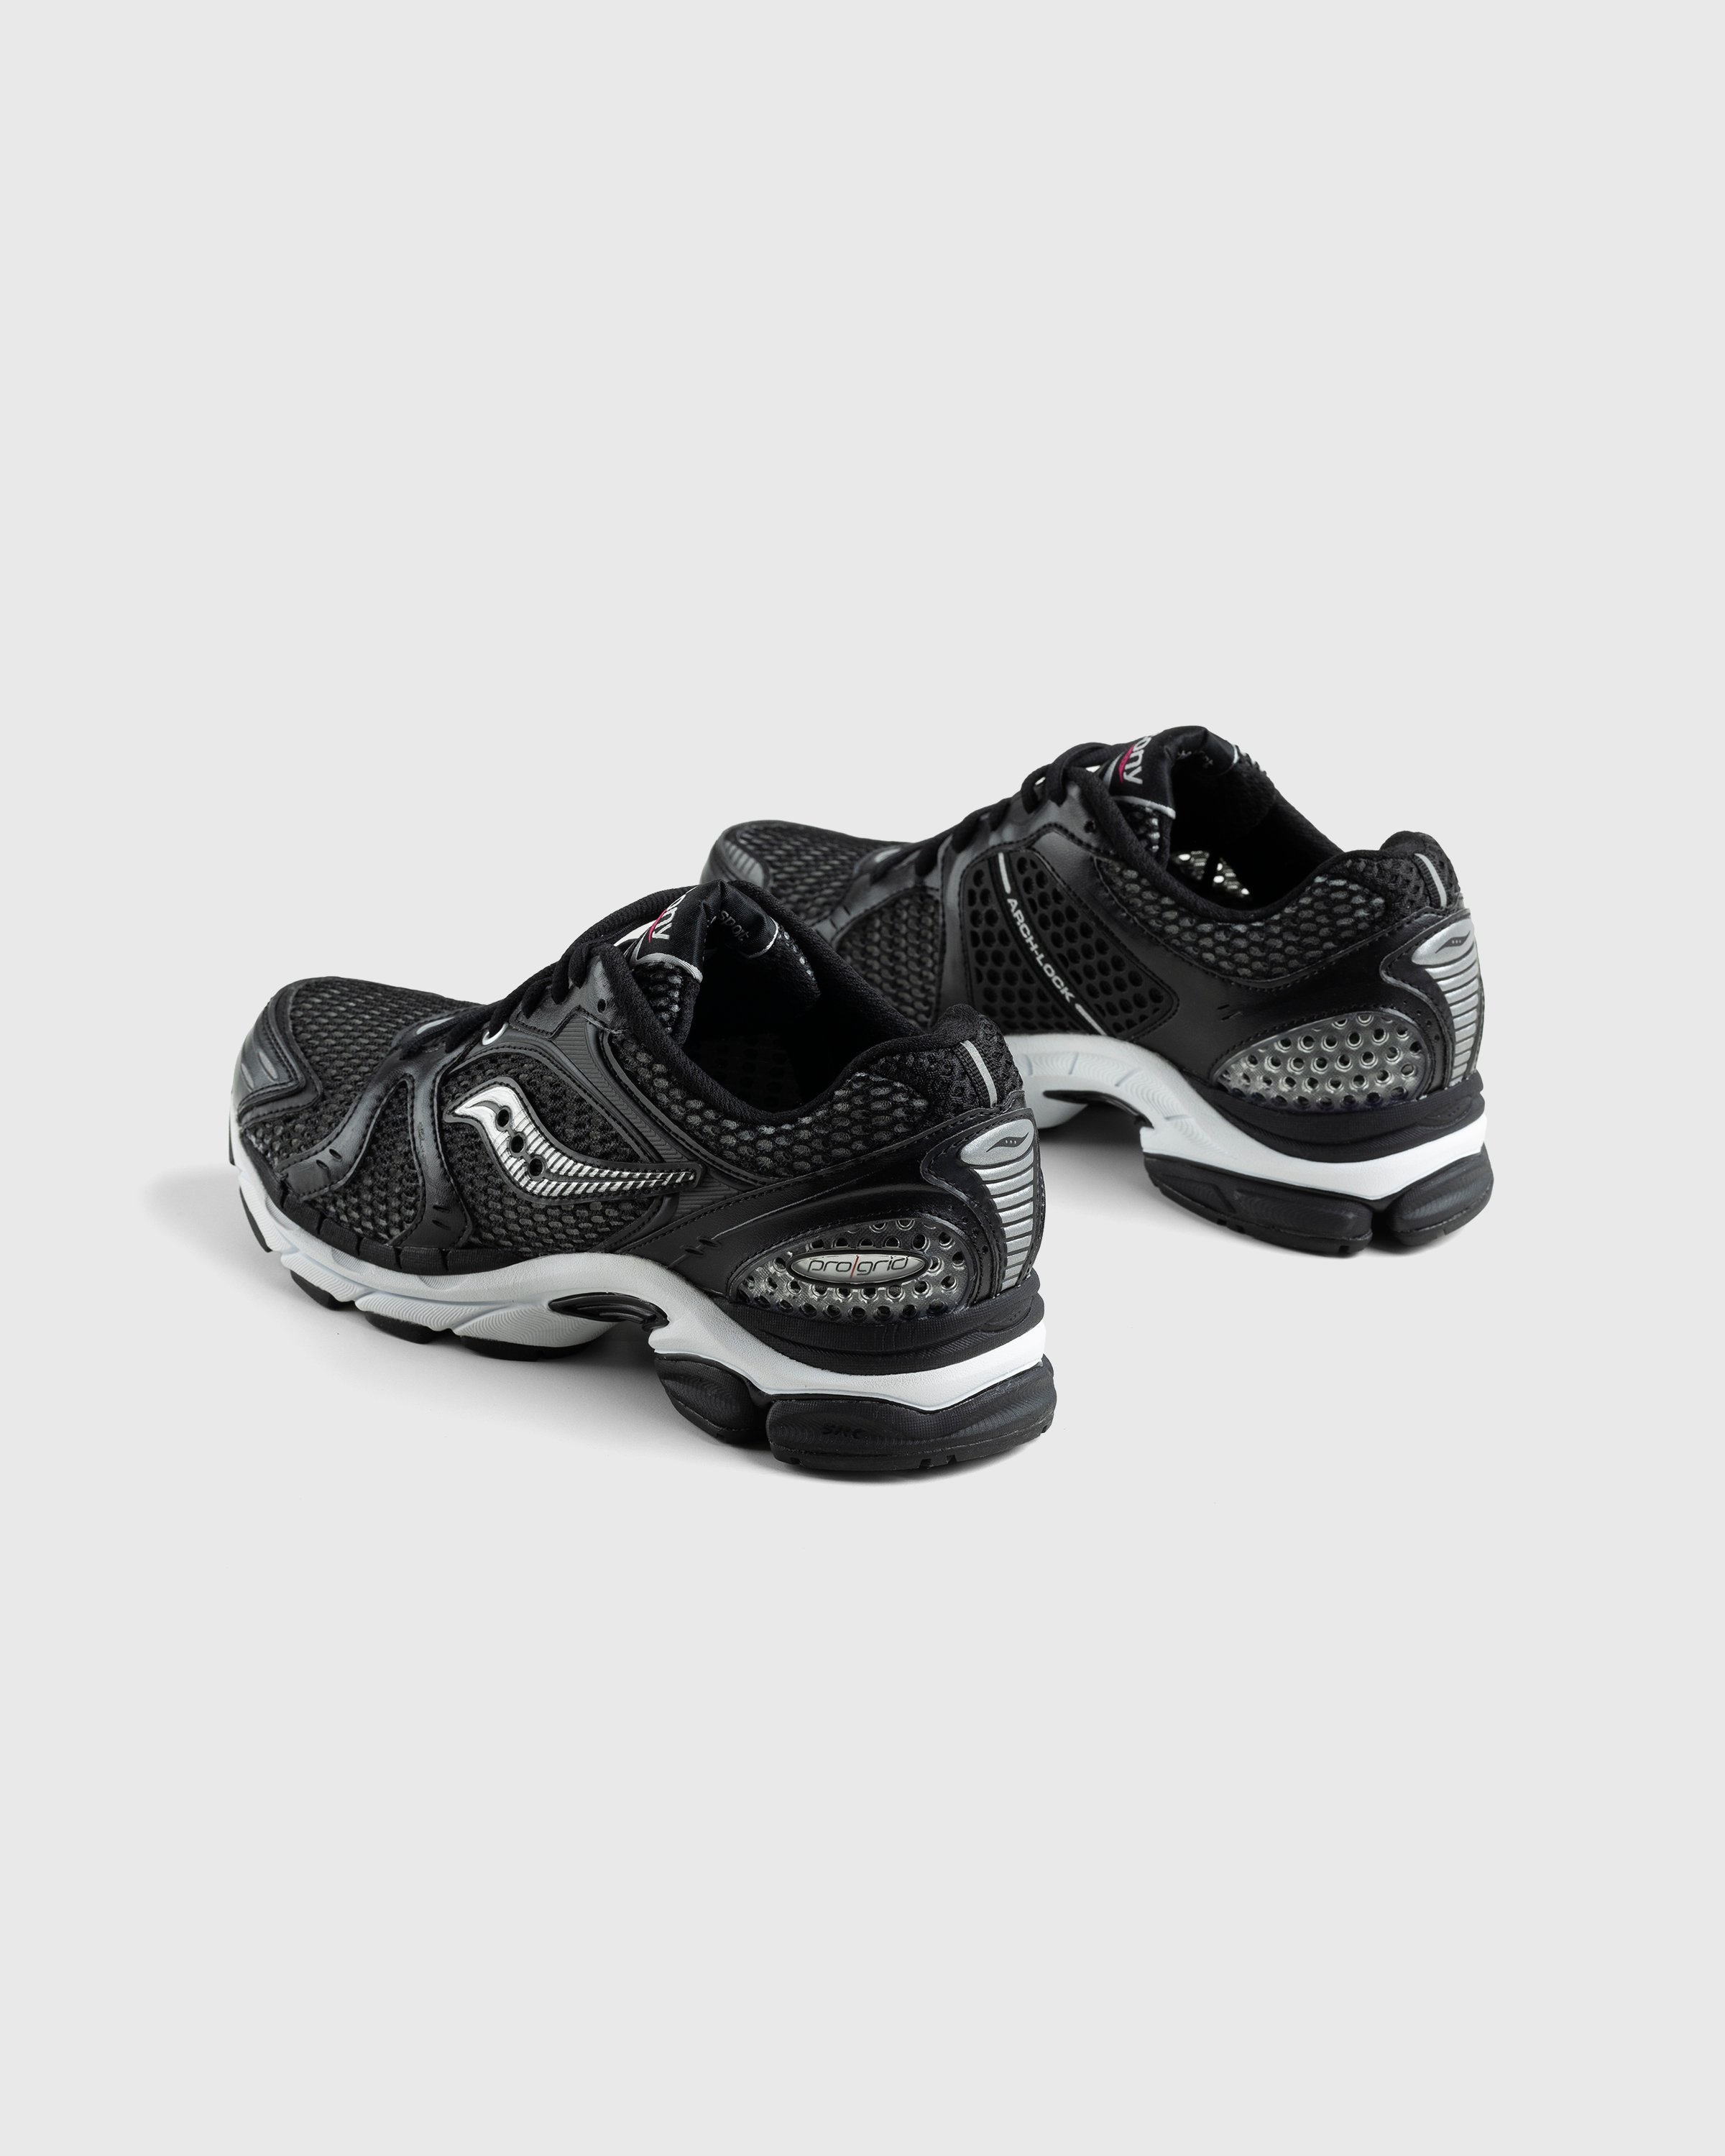 Saucony - ProGrid Triumph 4 Black - Footwear - Black - Image 4